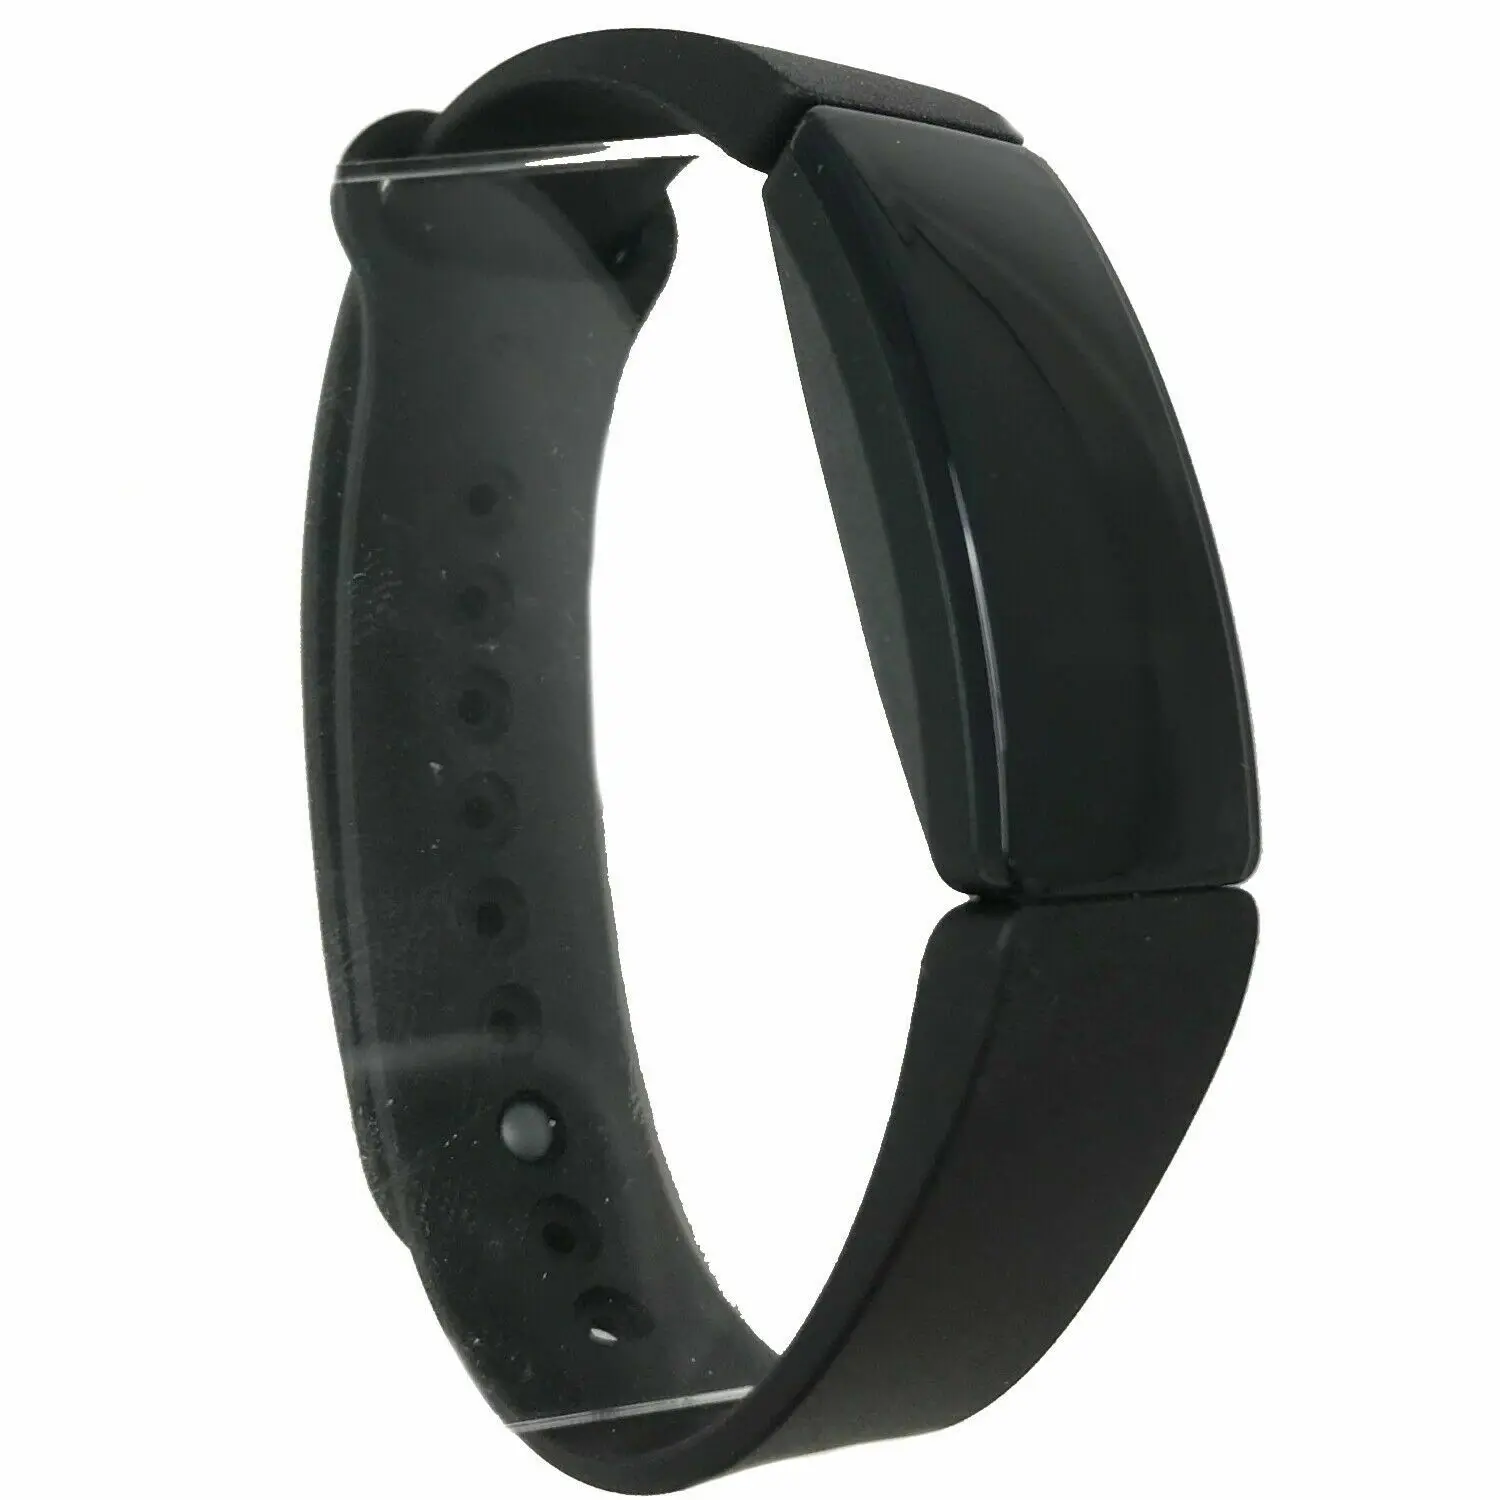 

Fitbit Inspire HR Fitness Smart Watch Tracker Wrist Band Sports Activity Black